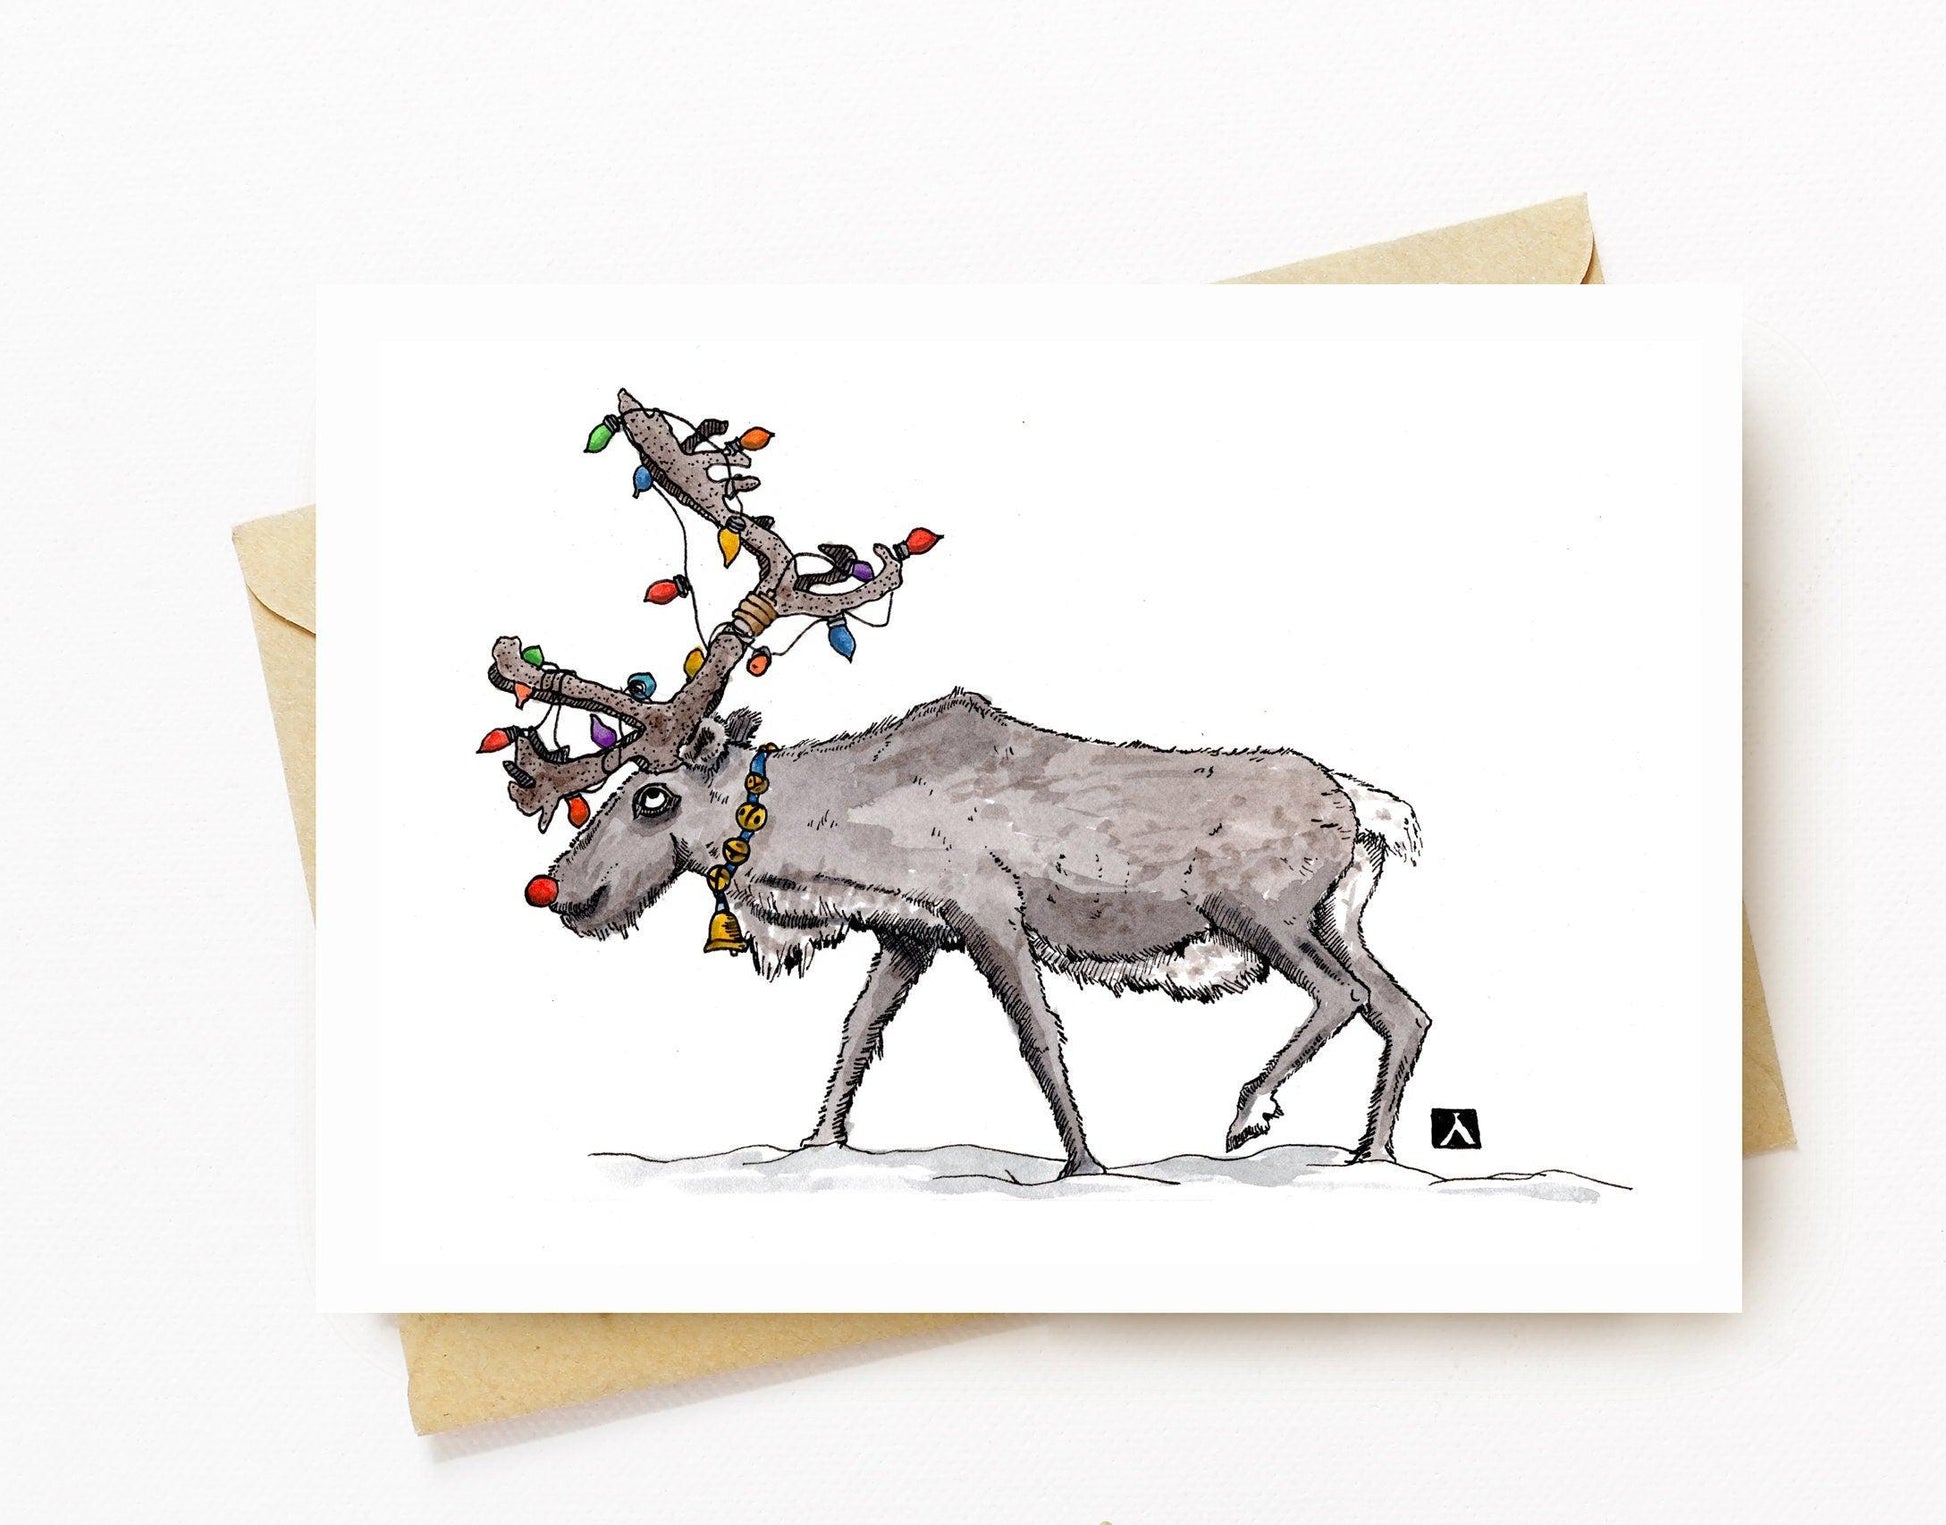 Santa and Rudolph Christmas Imagine Ink Book